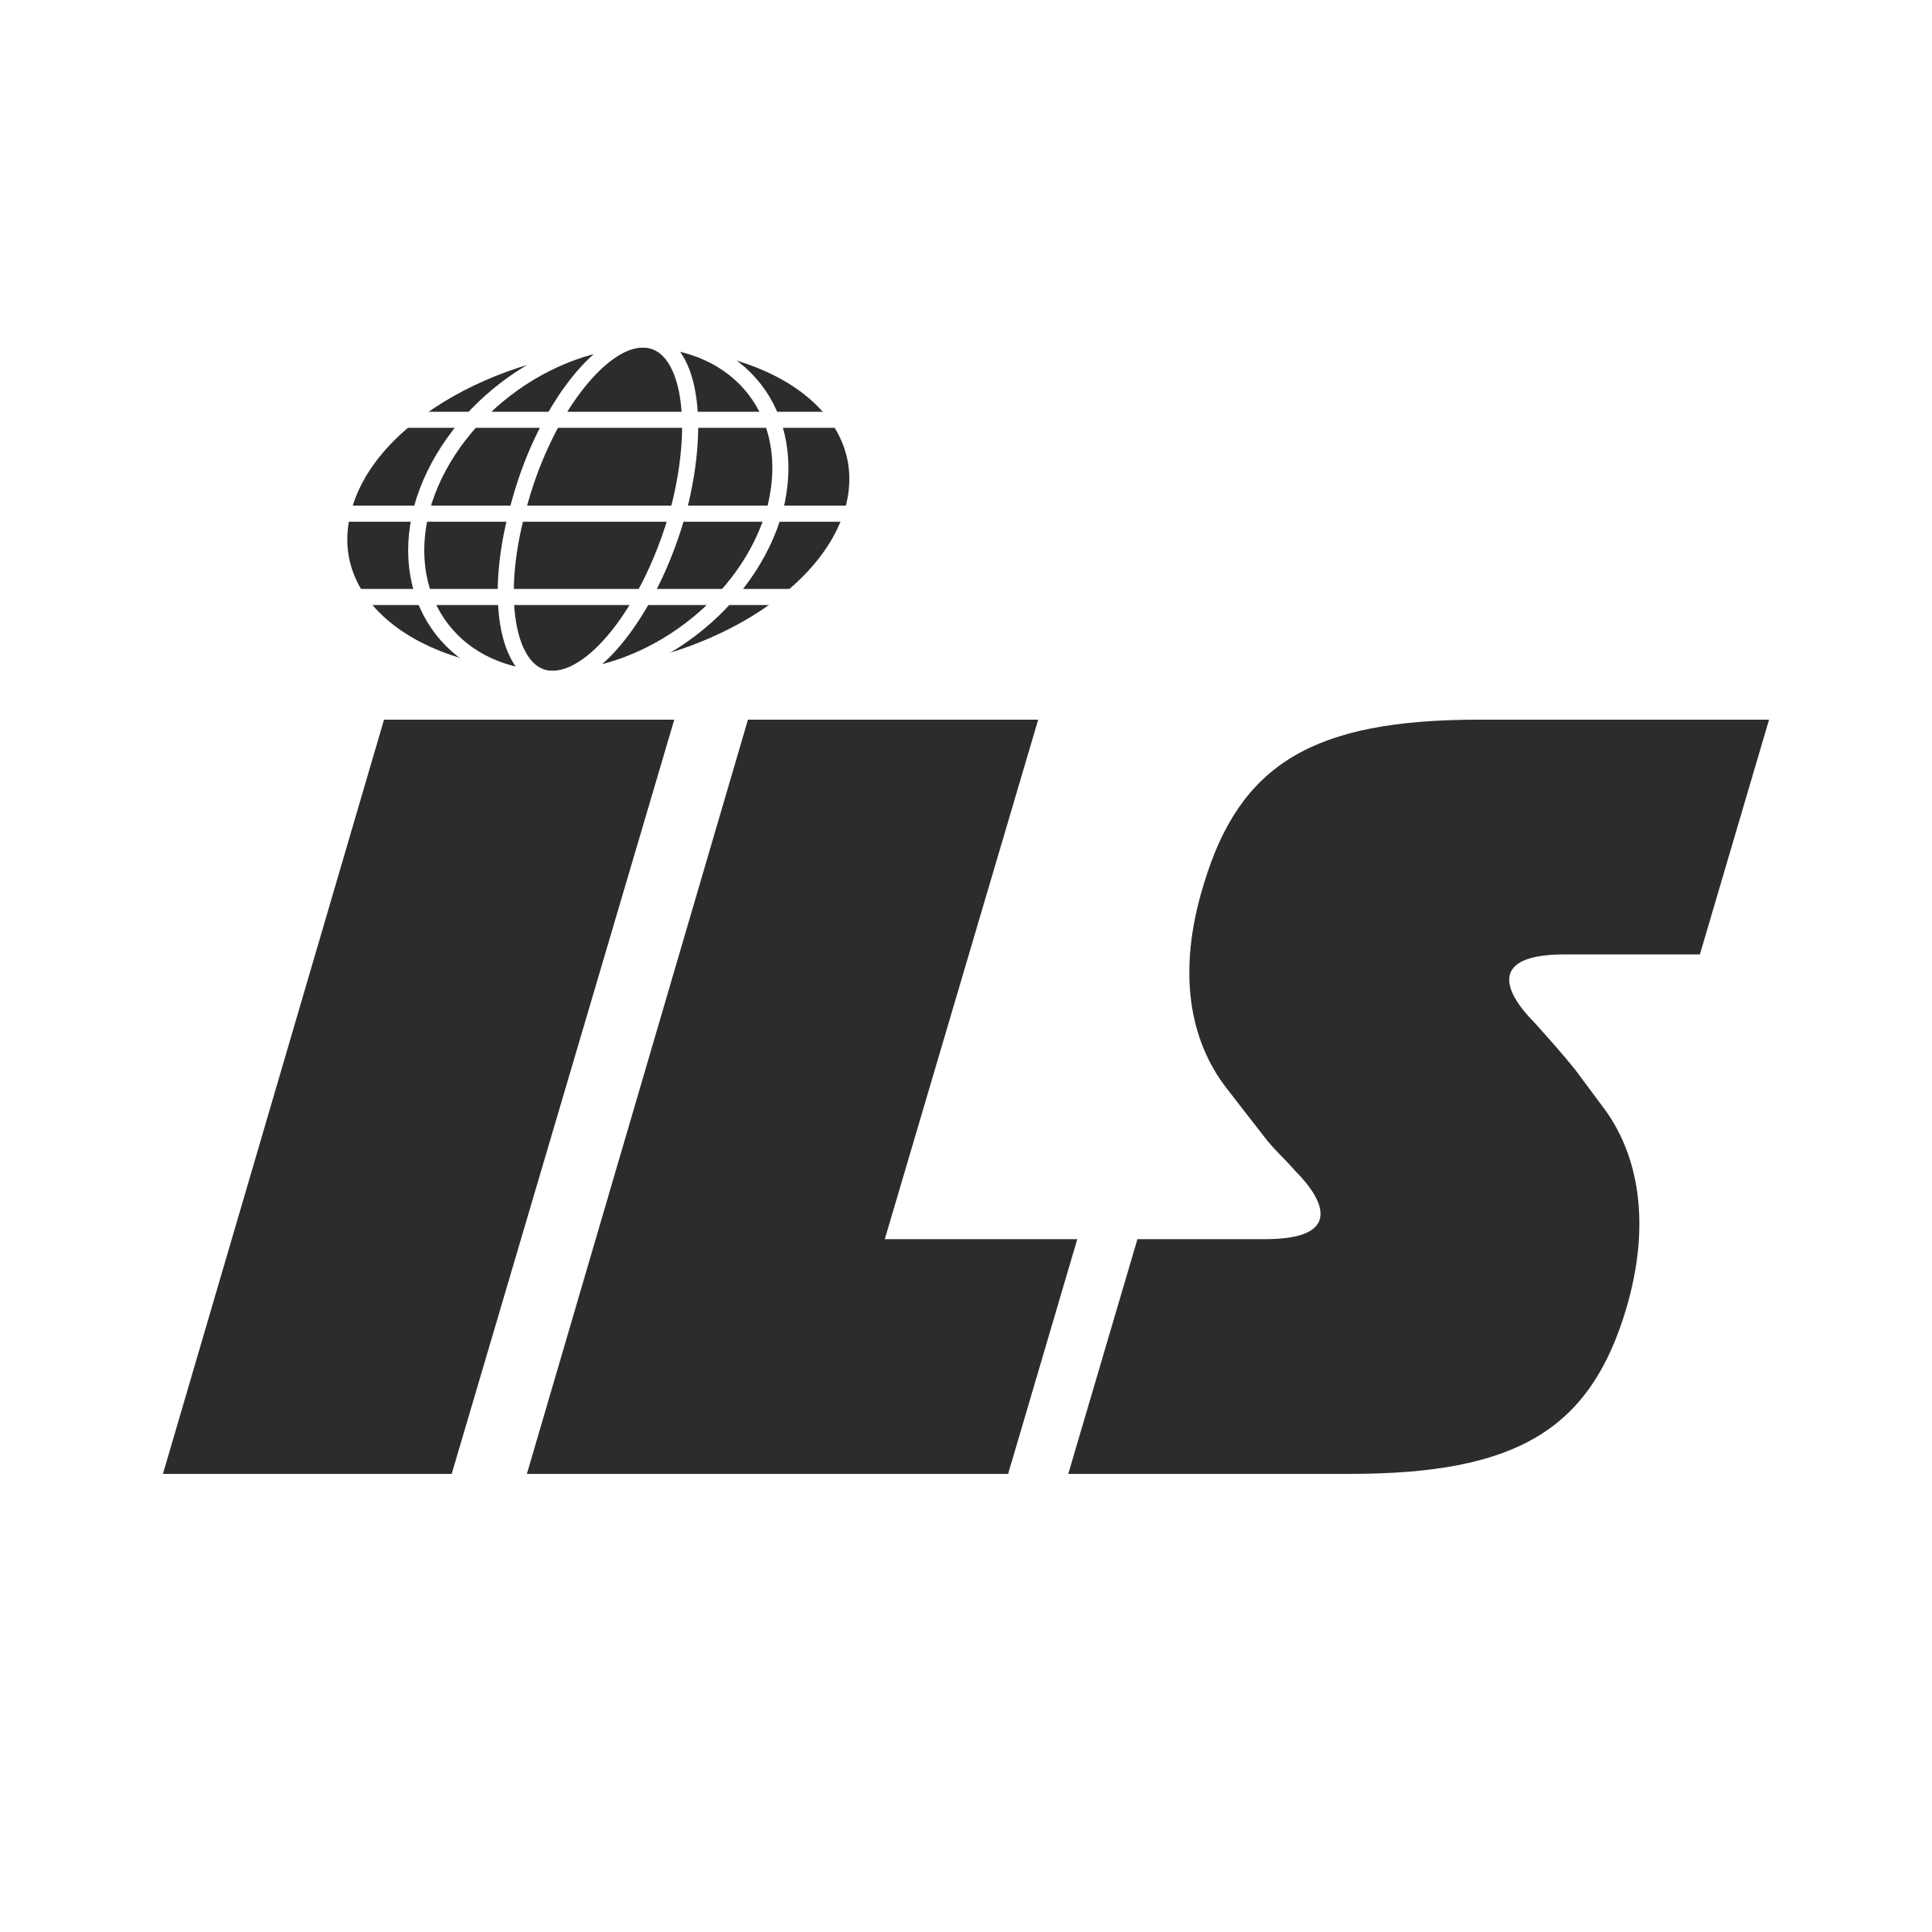 Ils Logo - ILS Logo PNG Transparent & SVG Vector - Freebie Supply